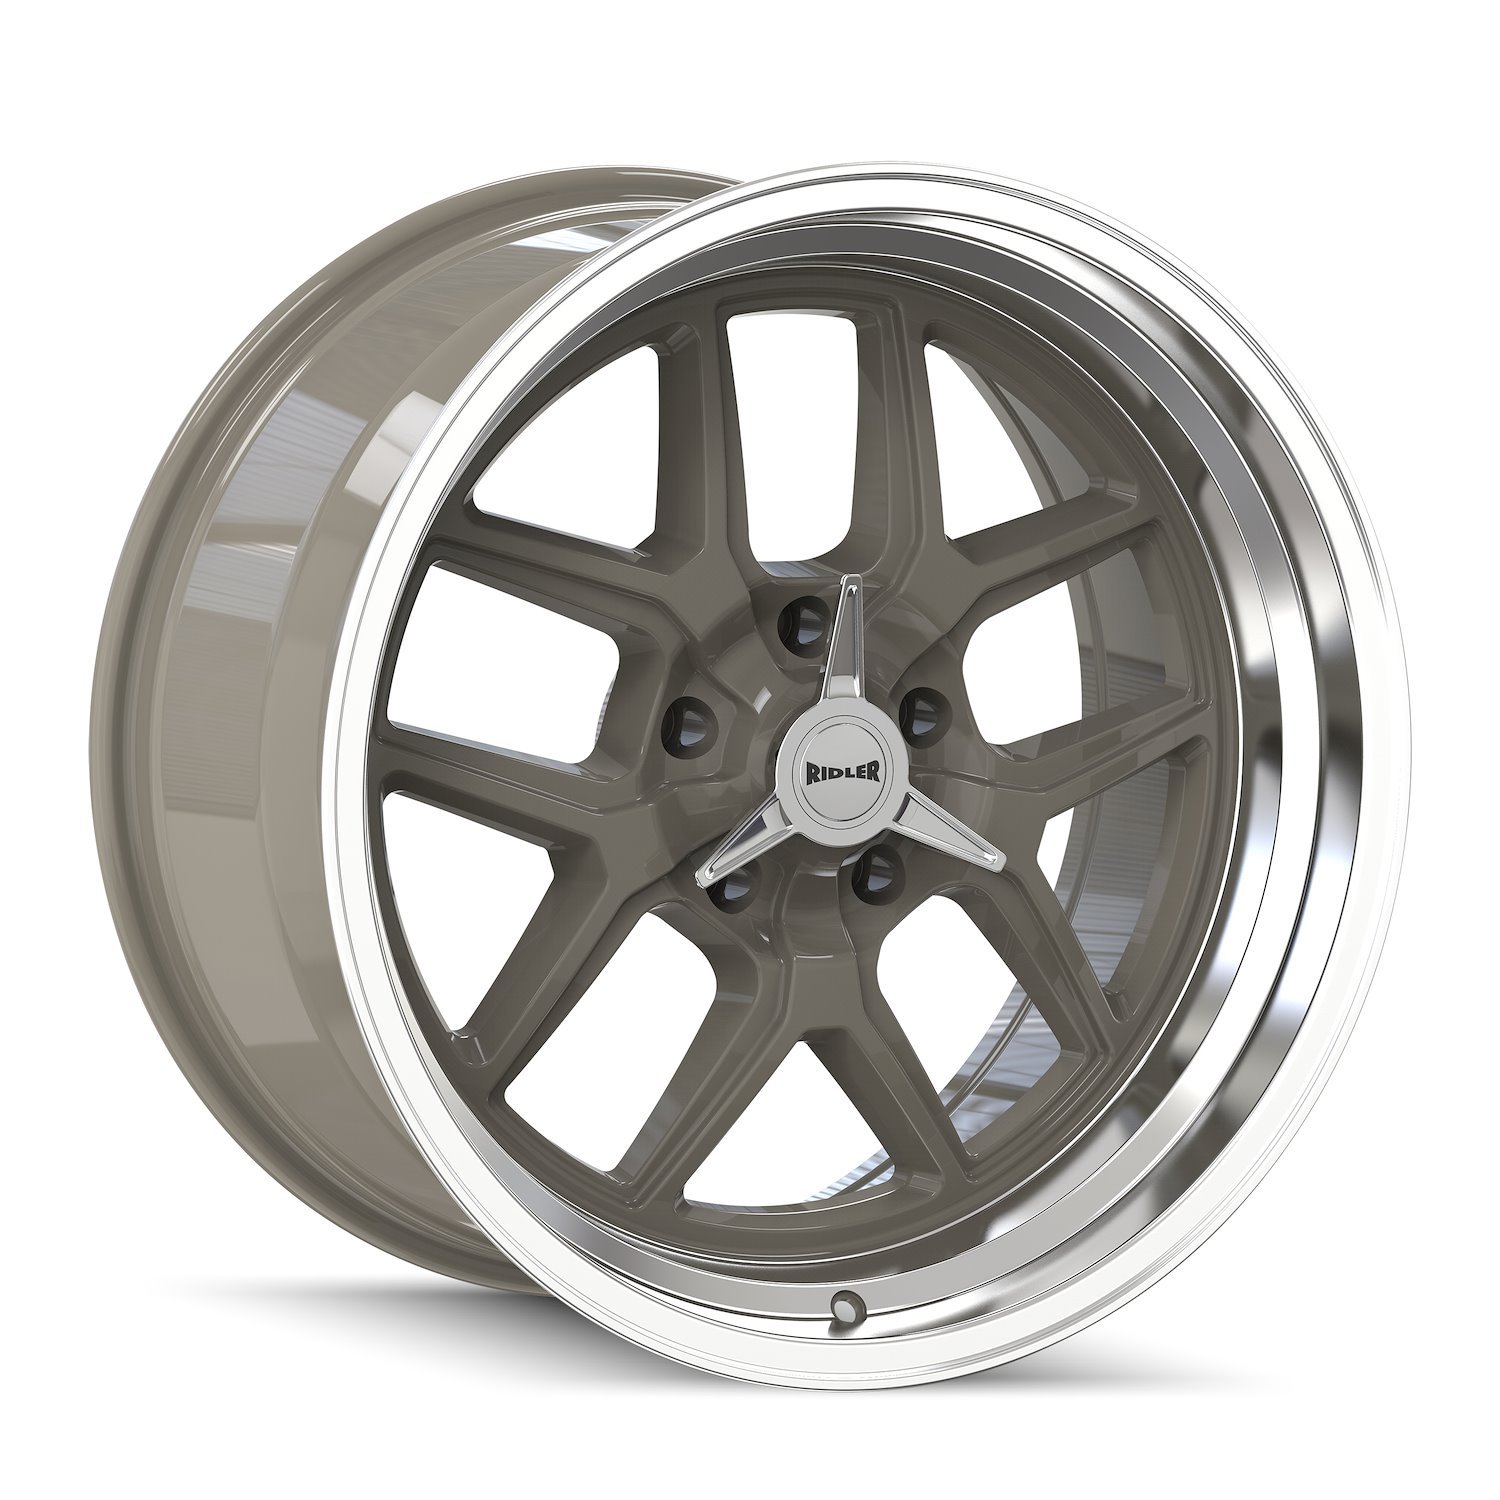 610-2173G 610-Series Wheel [Size: 20" x 10"] Gloss Grey Polished Finish